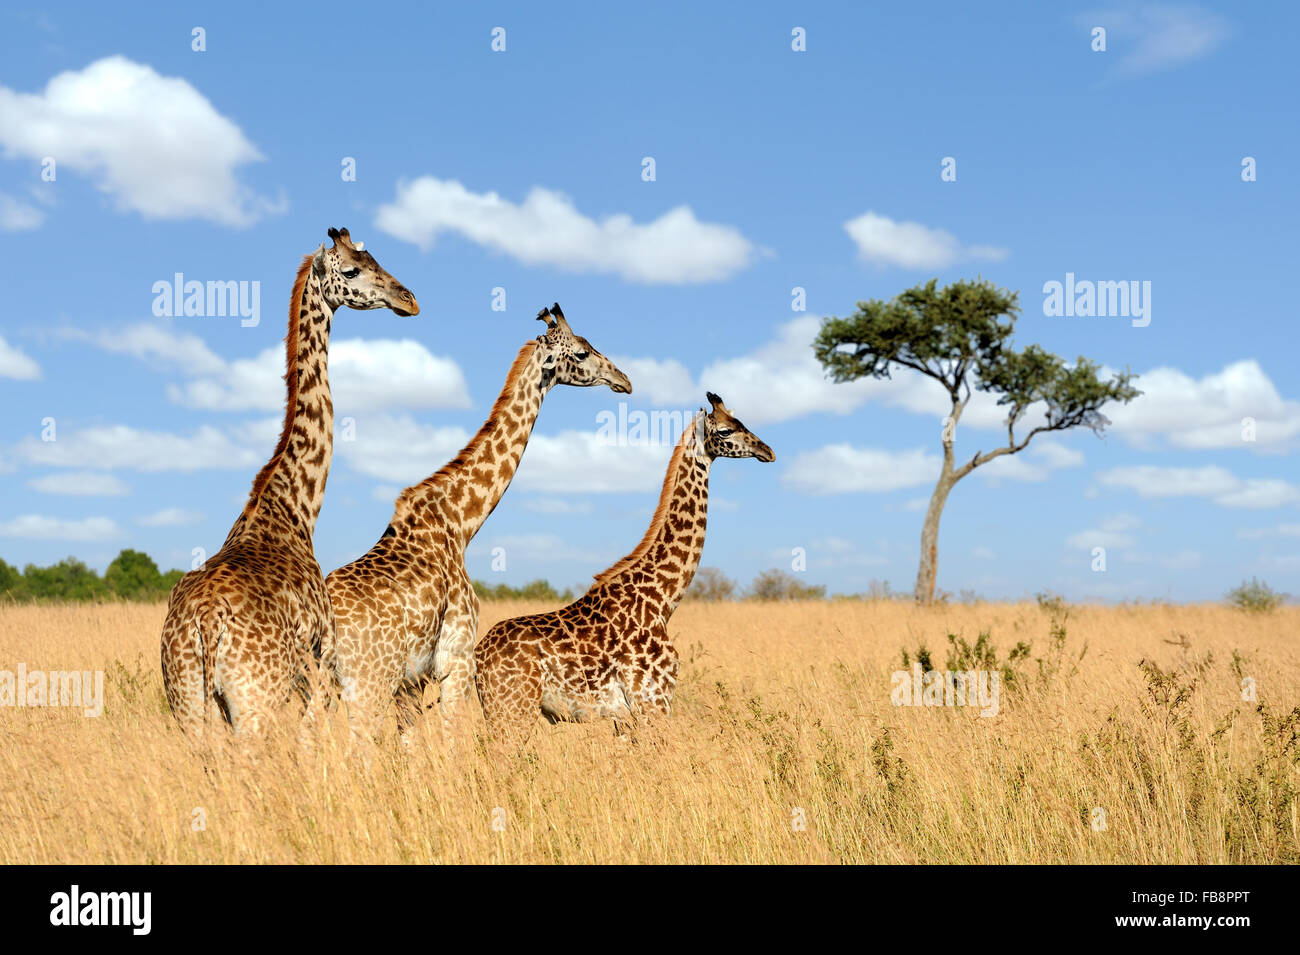 Girafe Groupe dans le parc national du Kenya, Afrique Banque D'Images